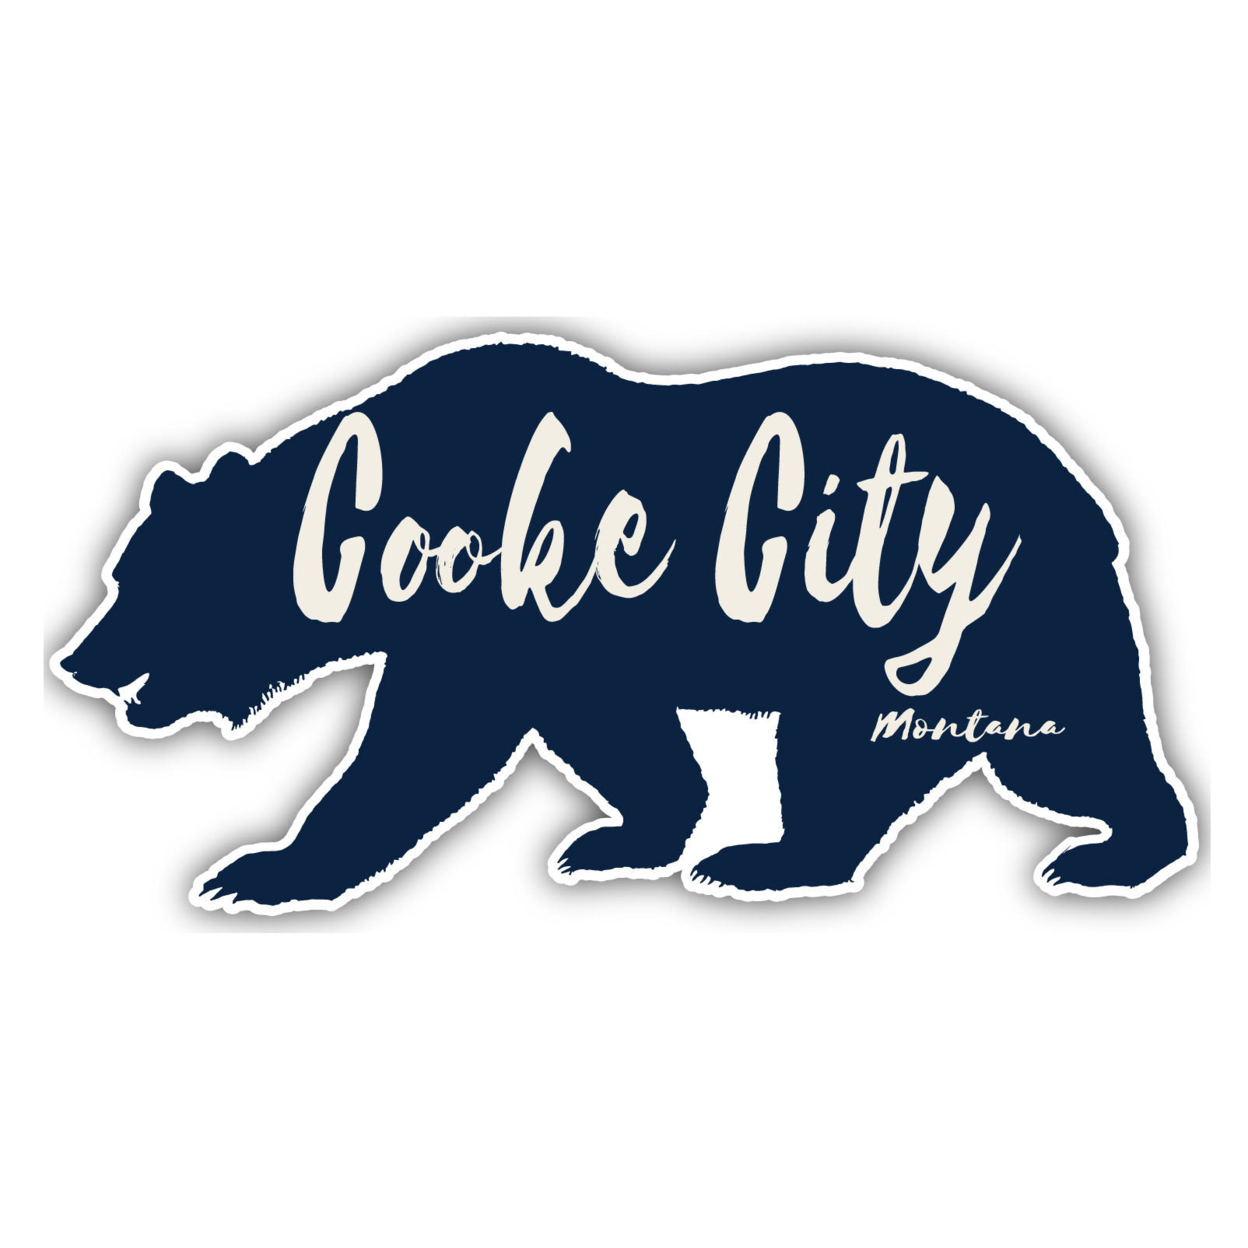 Cooke City Montana Souvenir Decorative Stickers (Choose Theme And Size) - Single Unit, 2-Inch, Bear